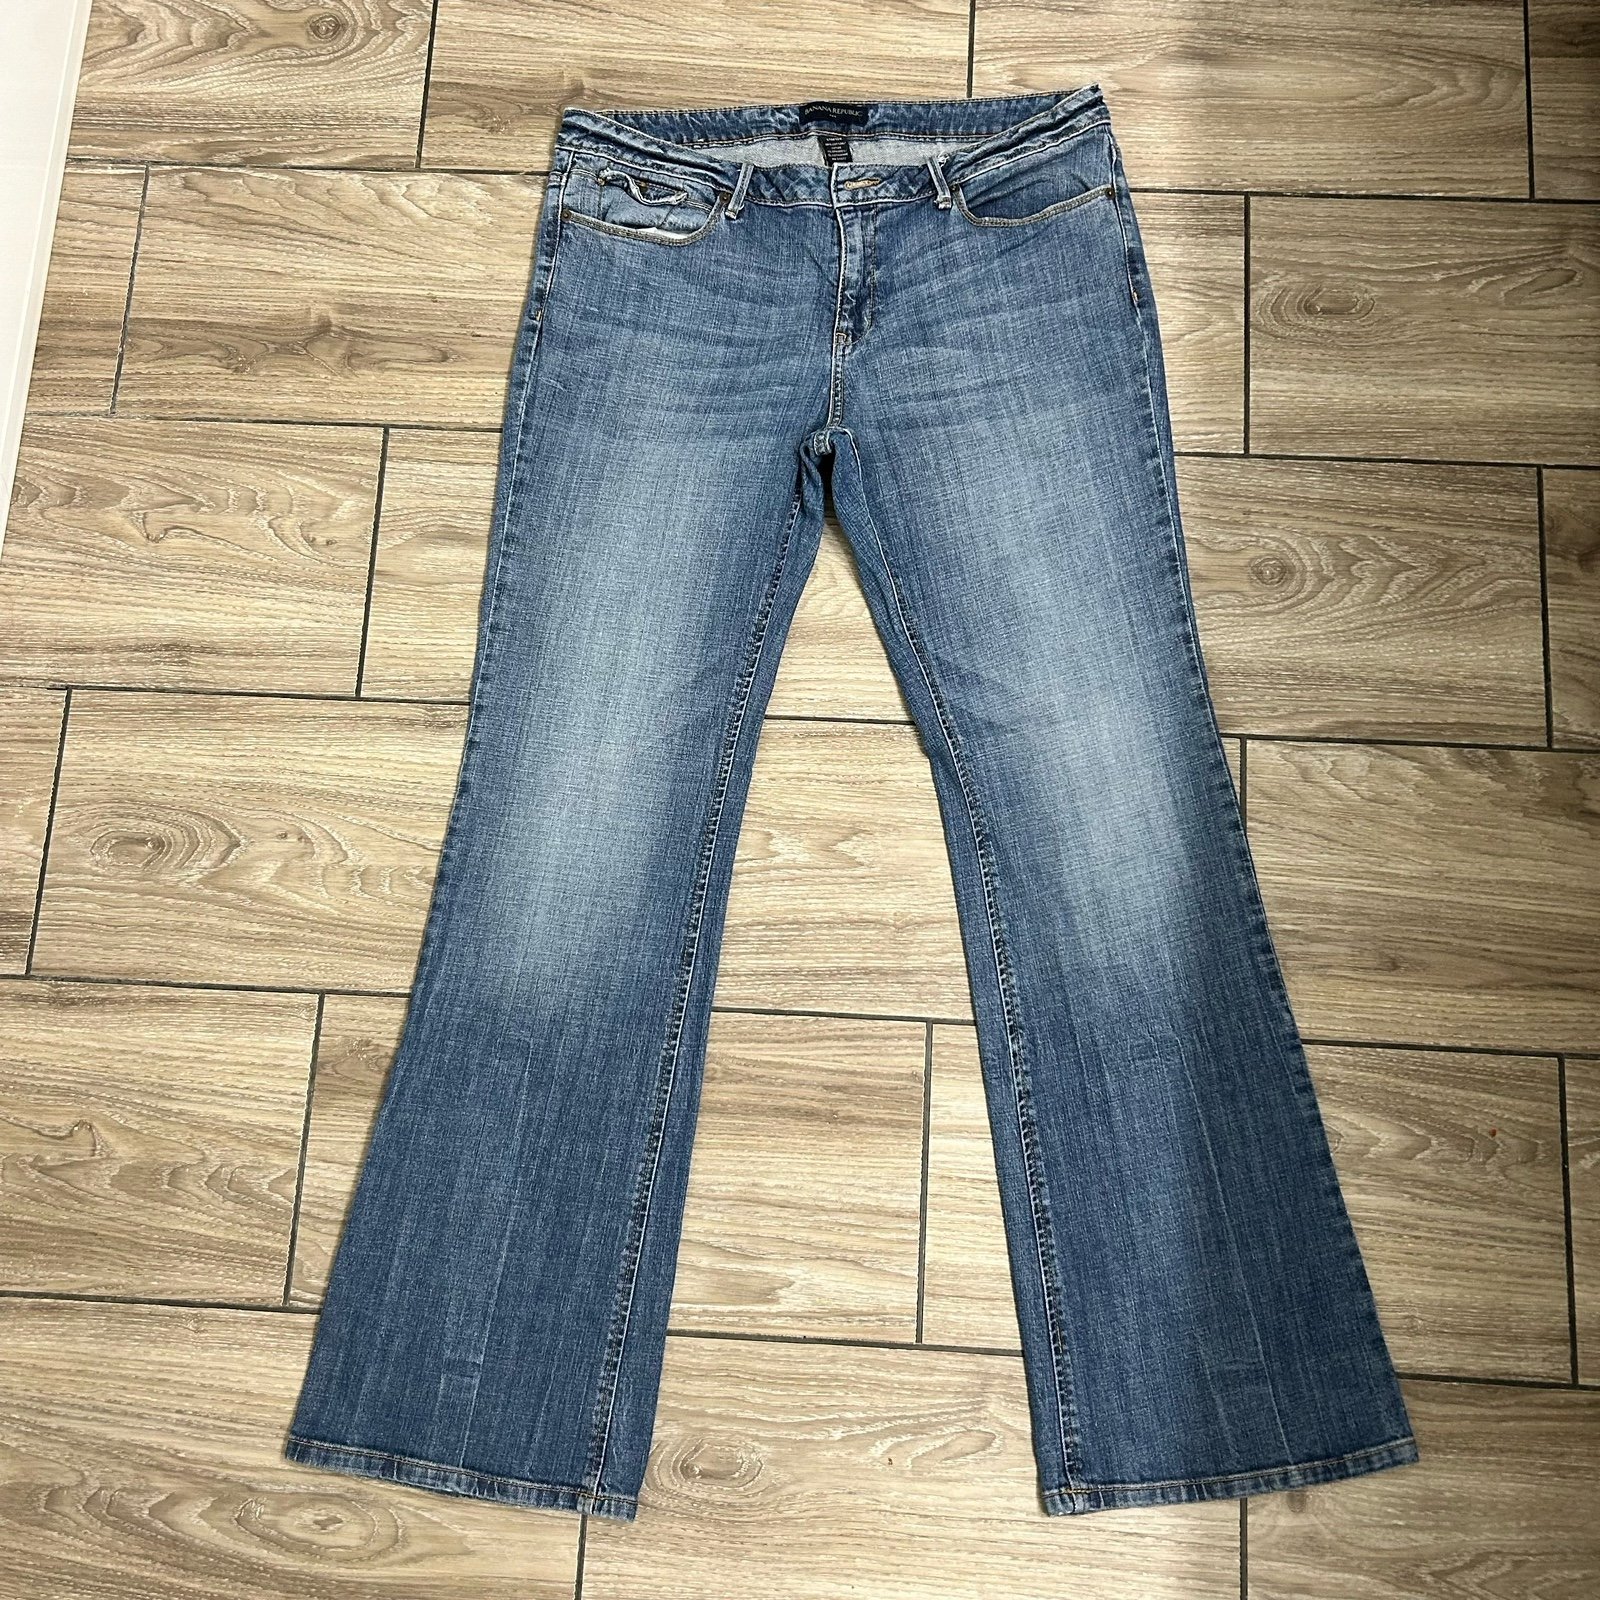 Popular Banana Republic Womens Jeans Stretch 14R Button Back Pockets Medium Wash Denim NCByvSceL Discount